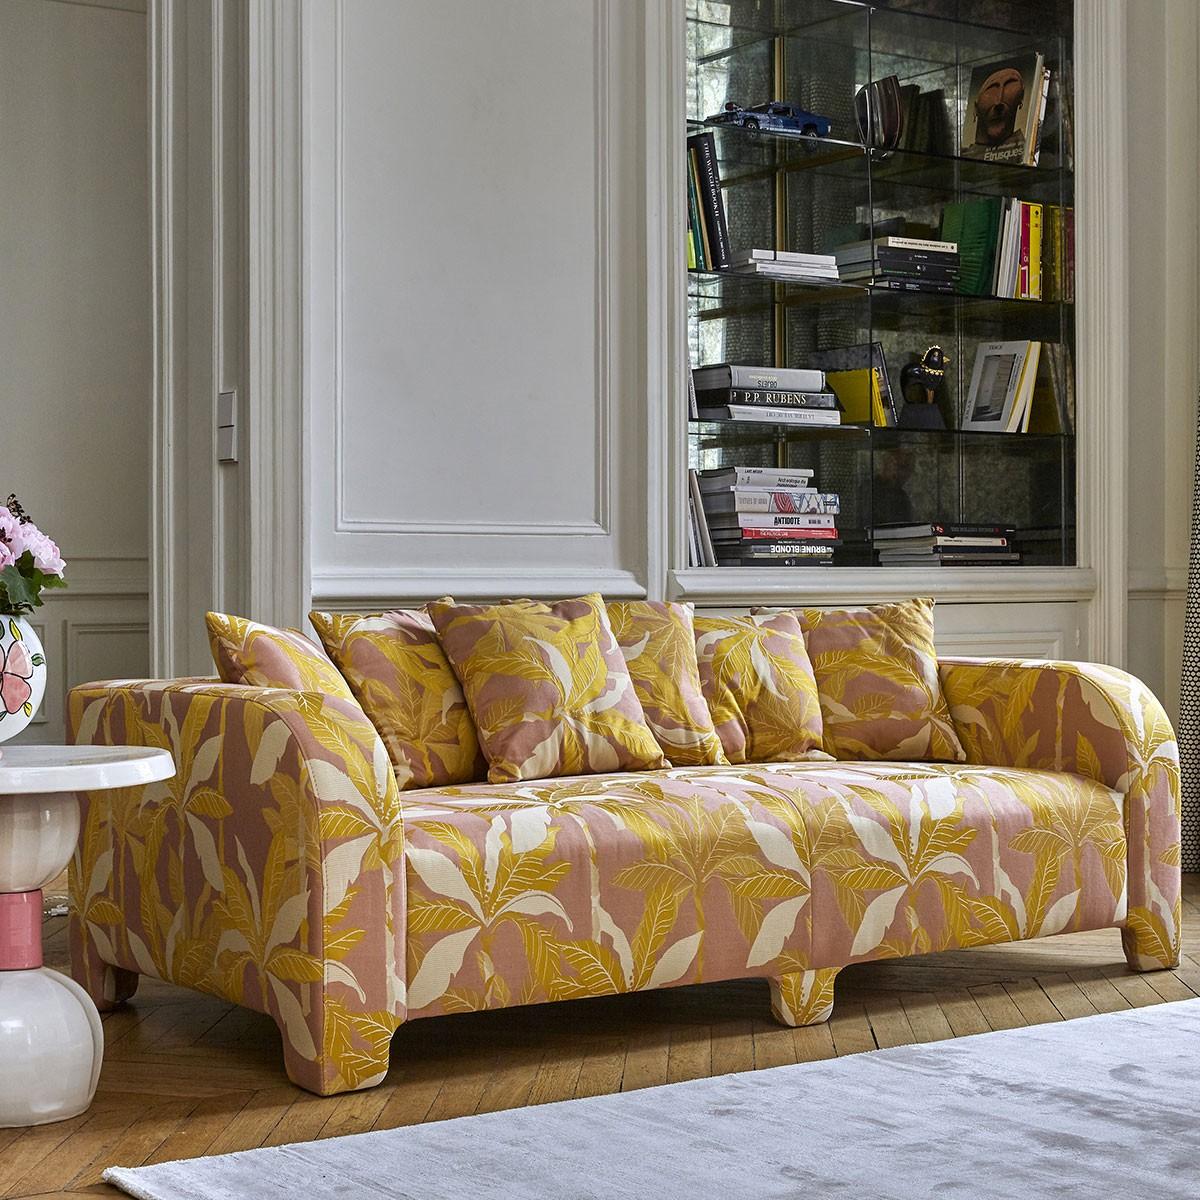 Popus Editions Graziella 4 Seater Sofa in Marrakesh London Linen Fabric In New Condition For Sale In Paris, FR